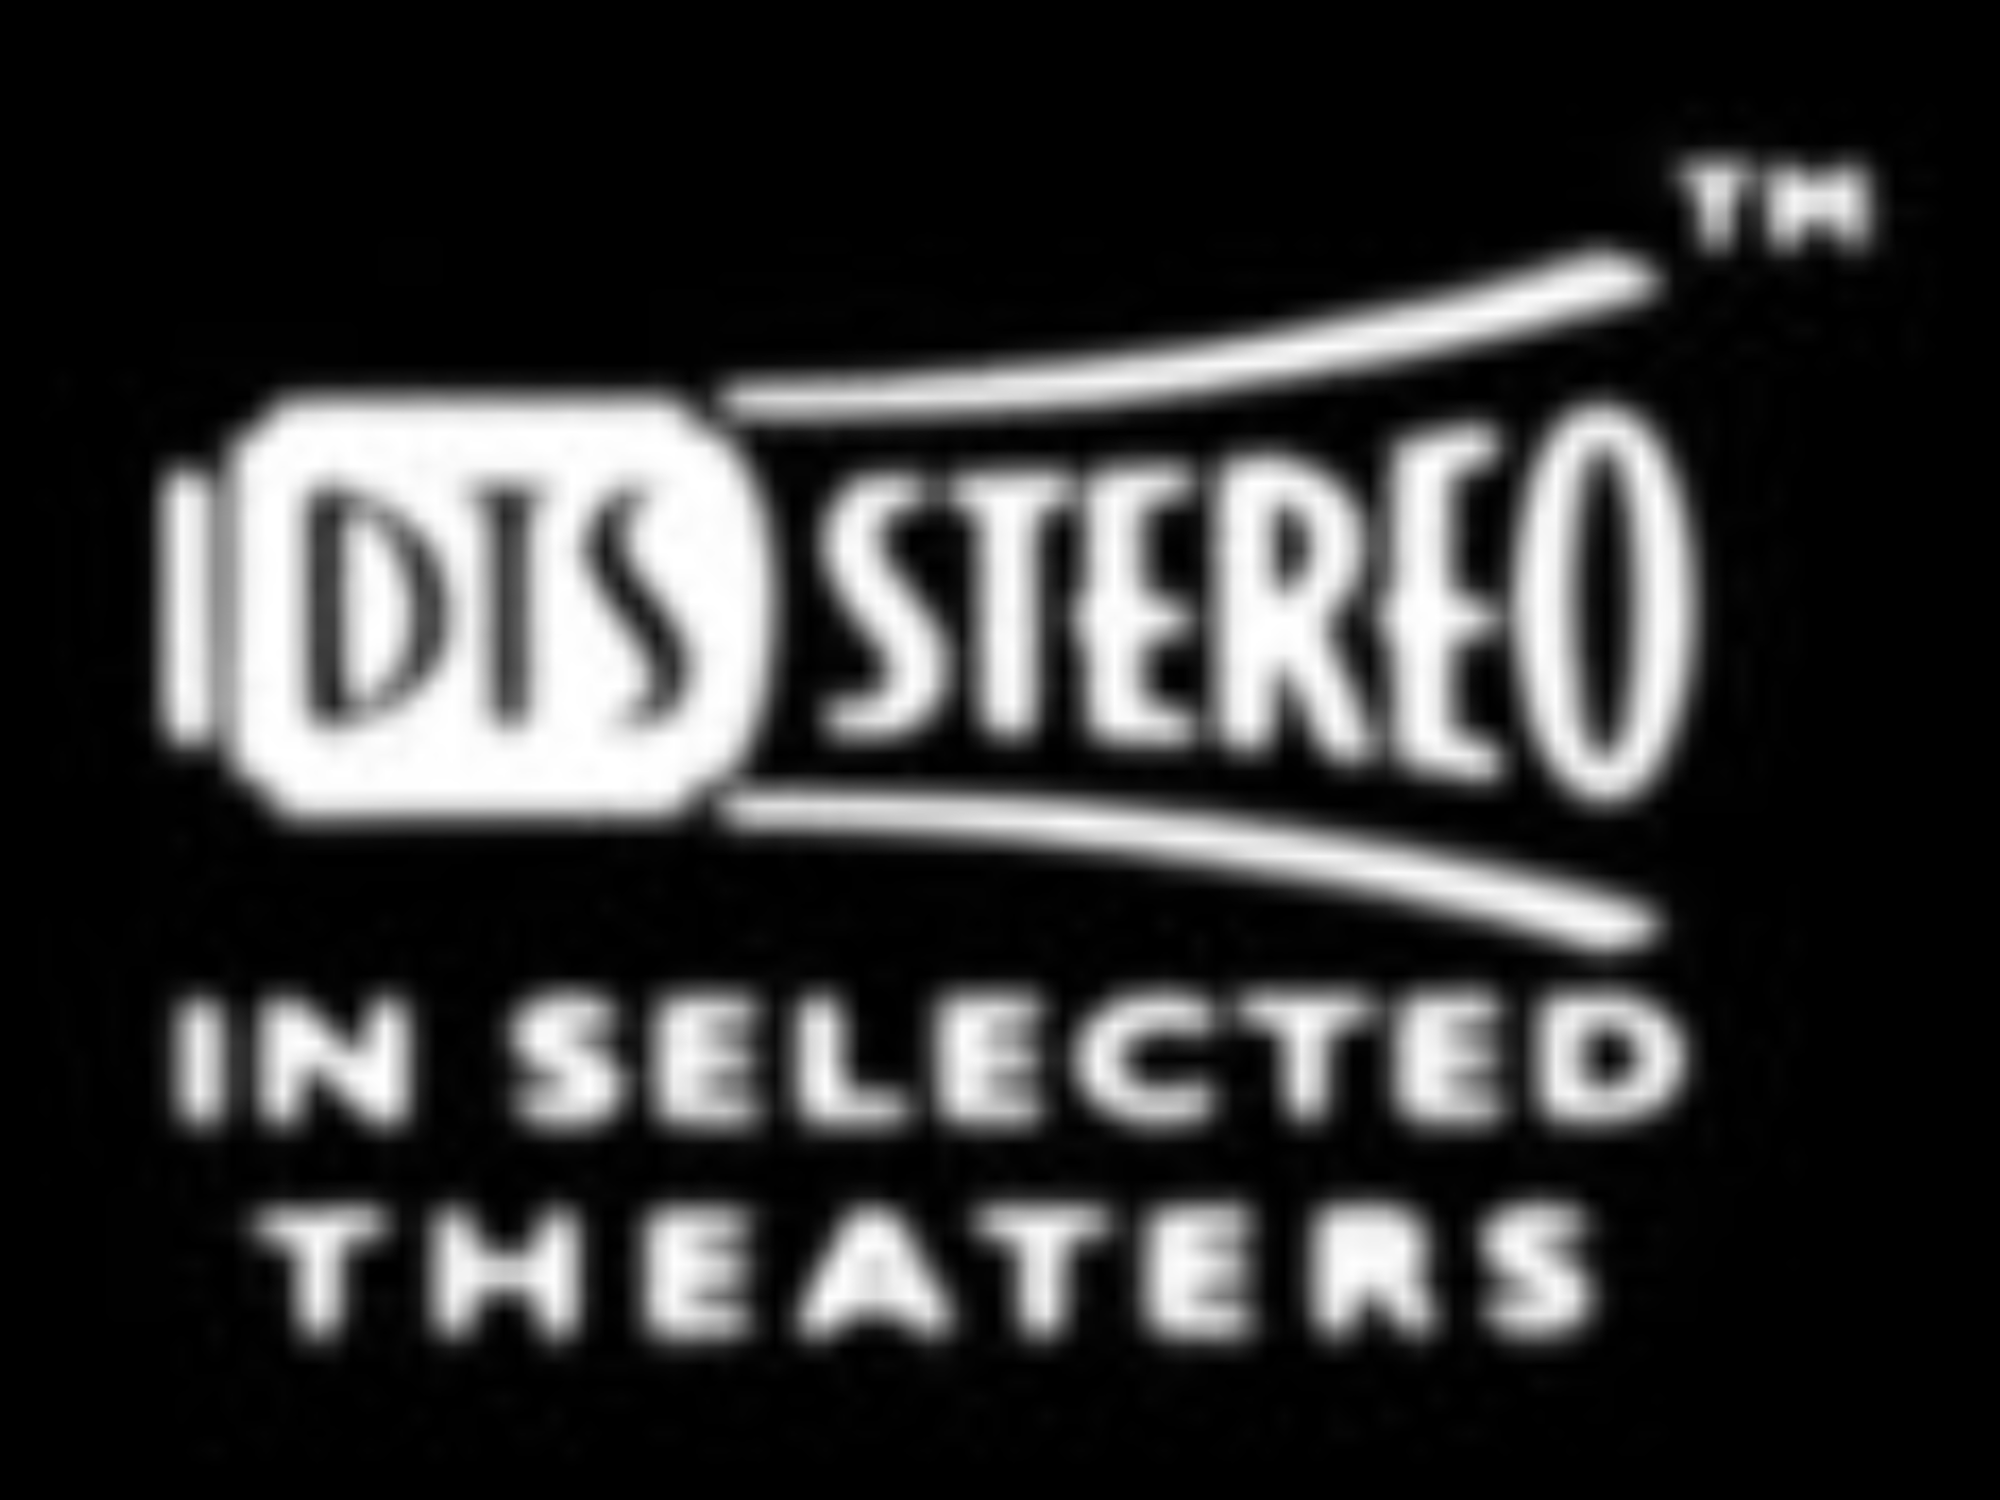 DTS Stereo Logo - DTS Stereo